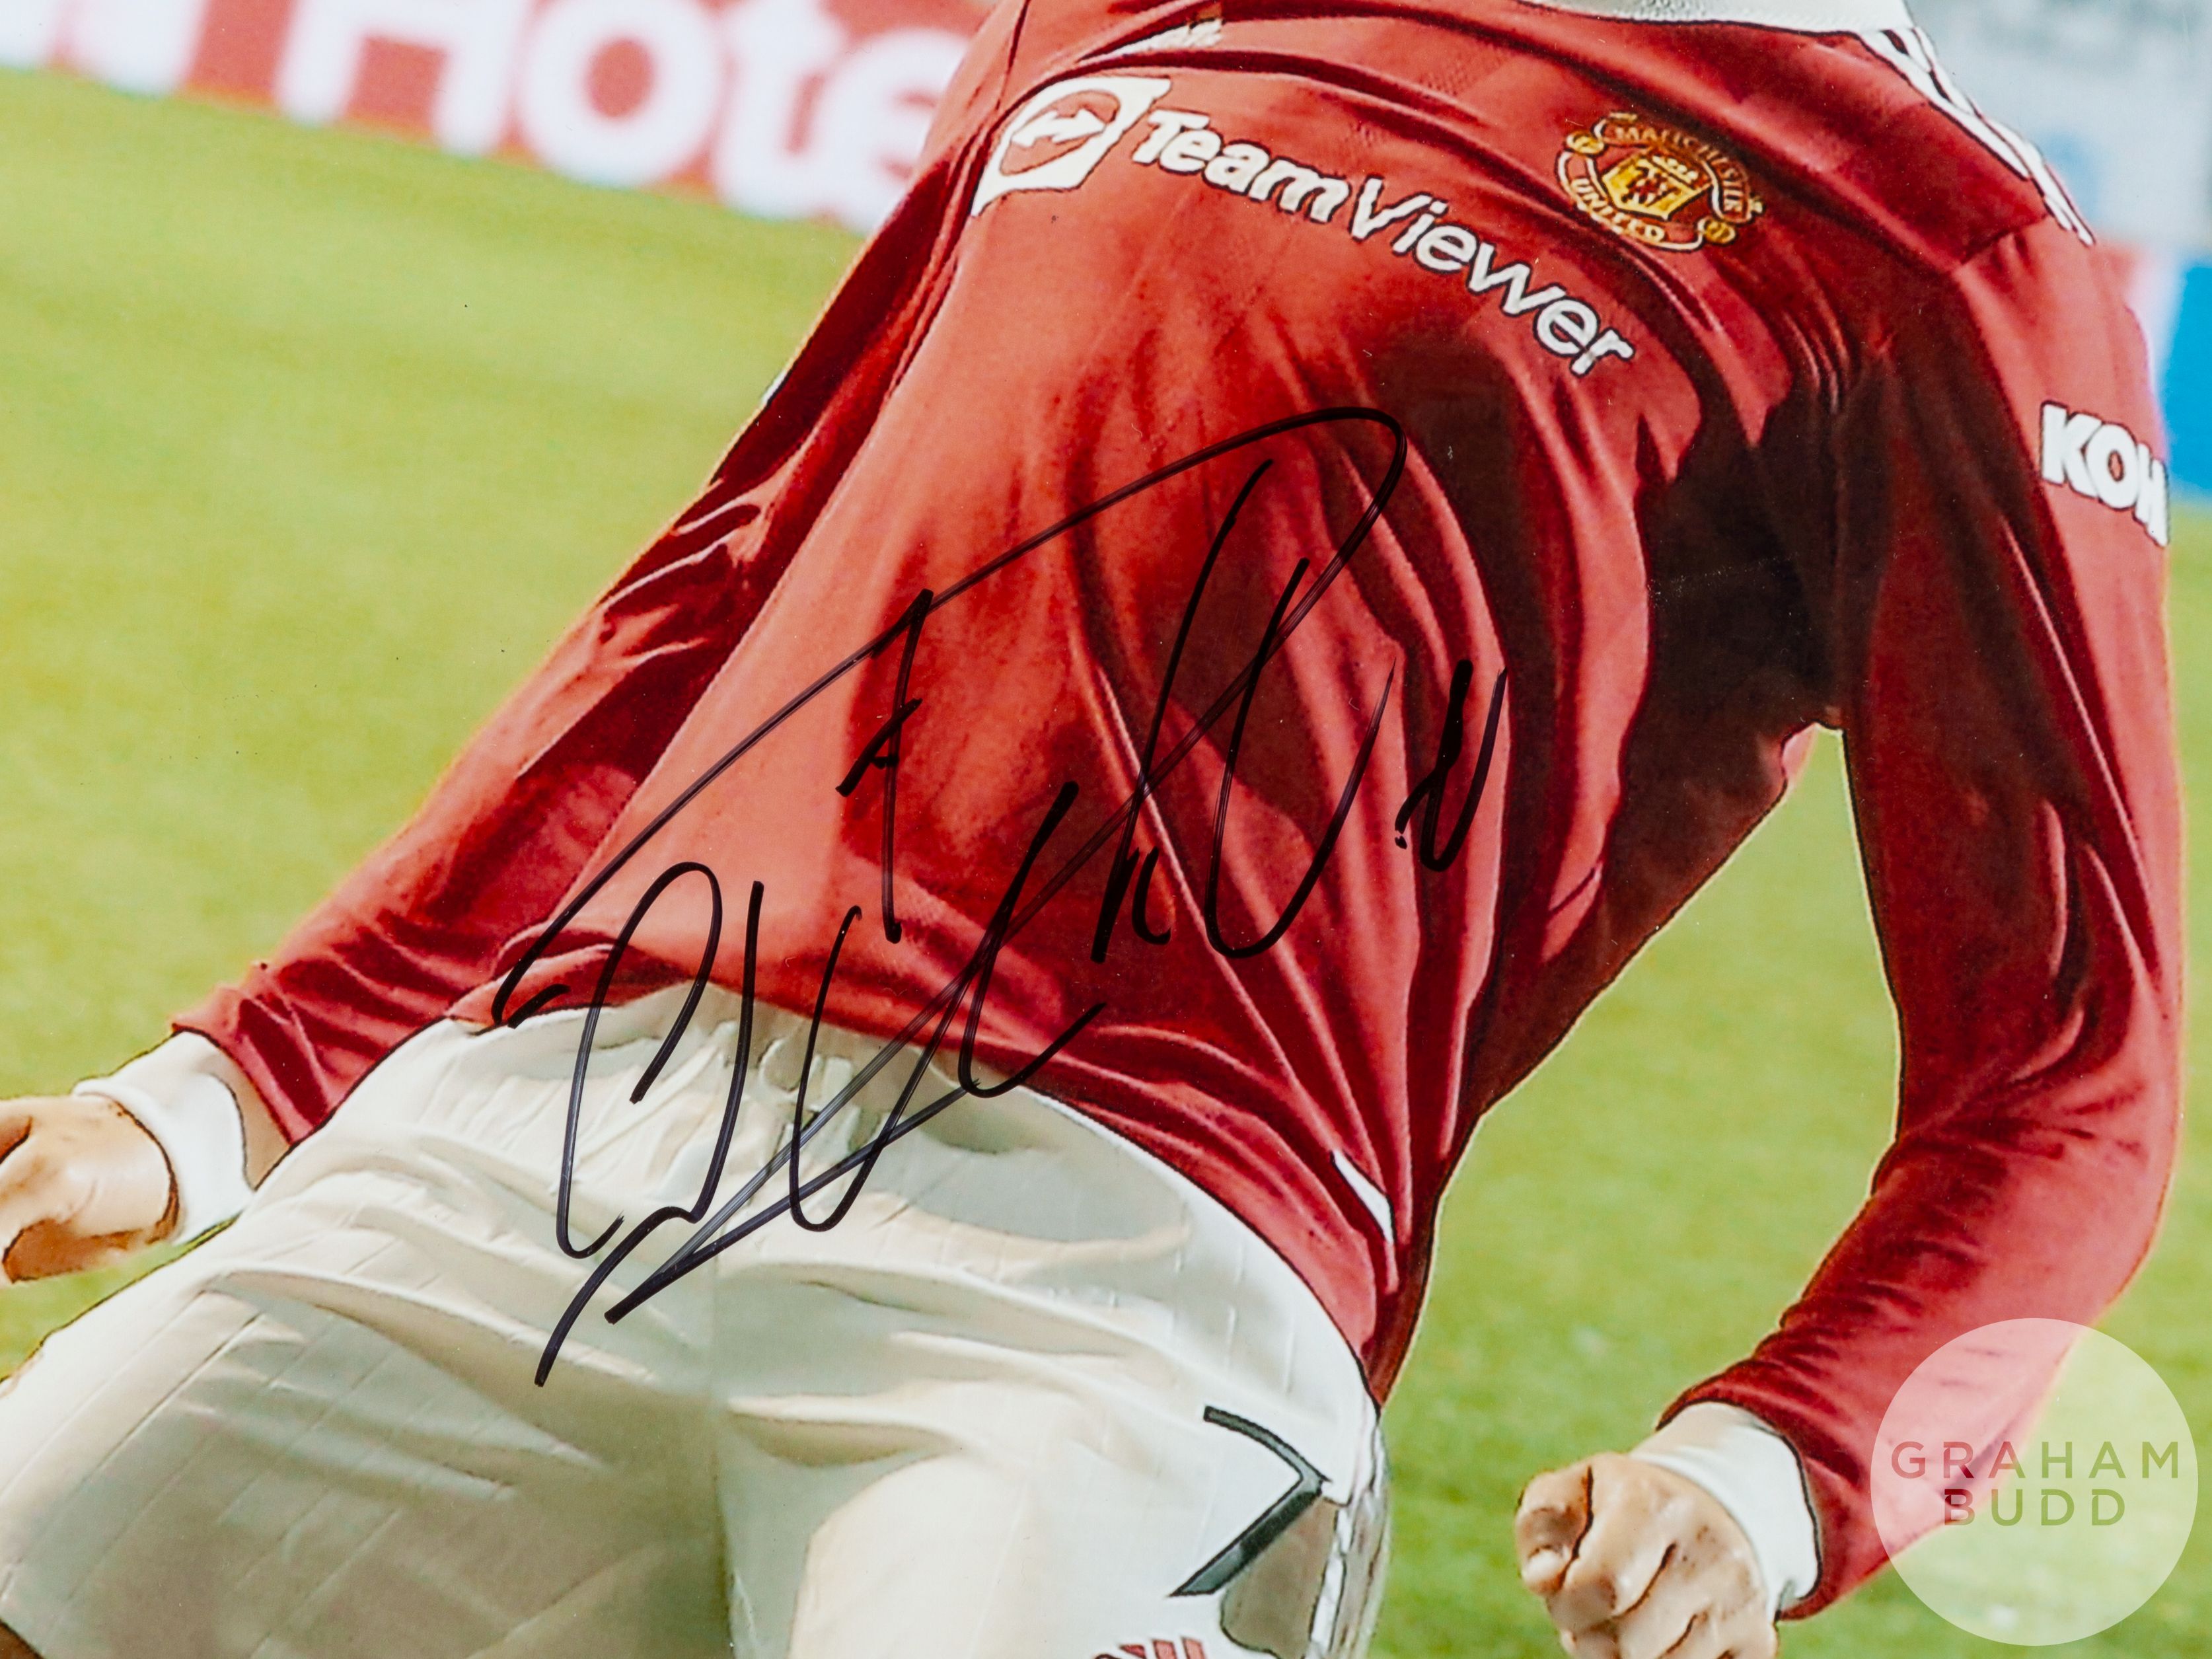 Cristiano Ronaldo signed Manchester United framed photograph, - Image 2 of 2